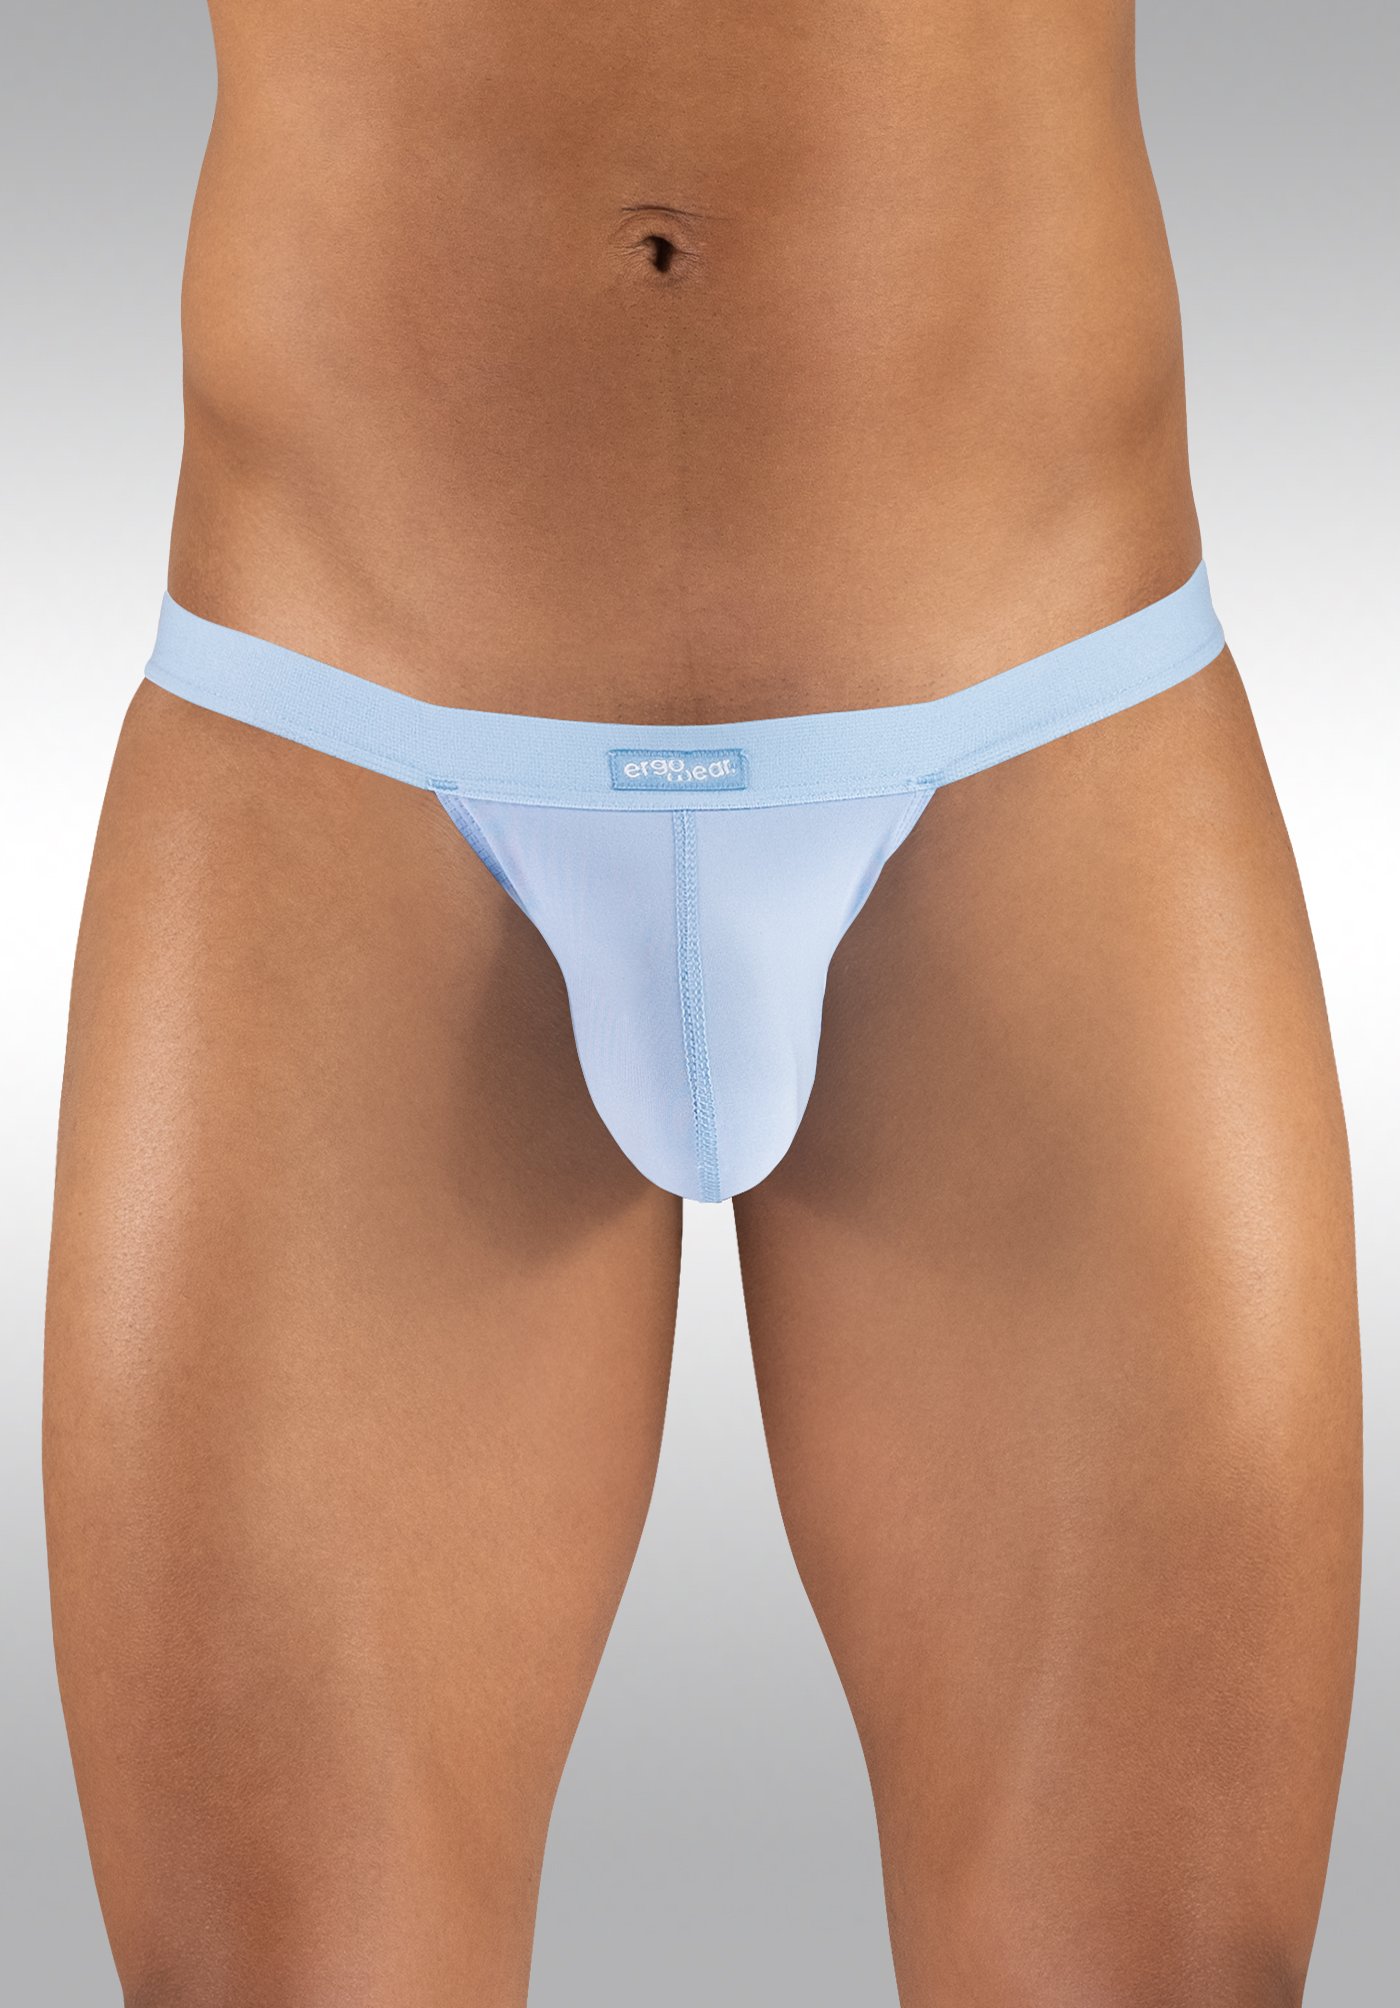 Men's Thongs Sky Blue - Men's Underwear with Pouch